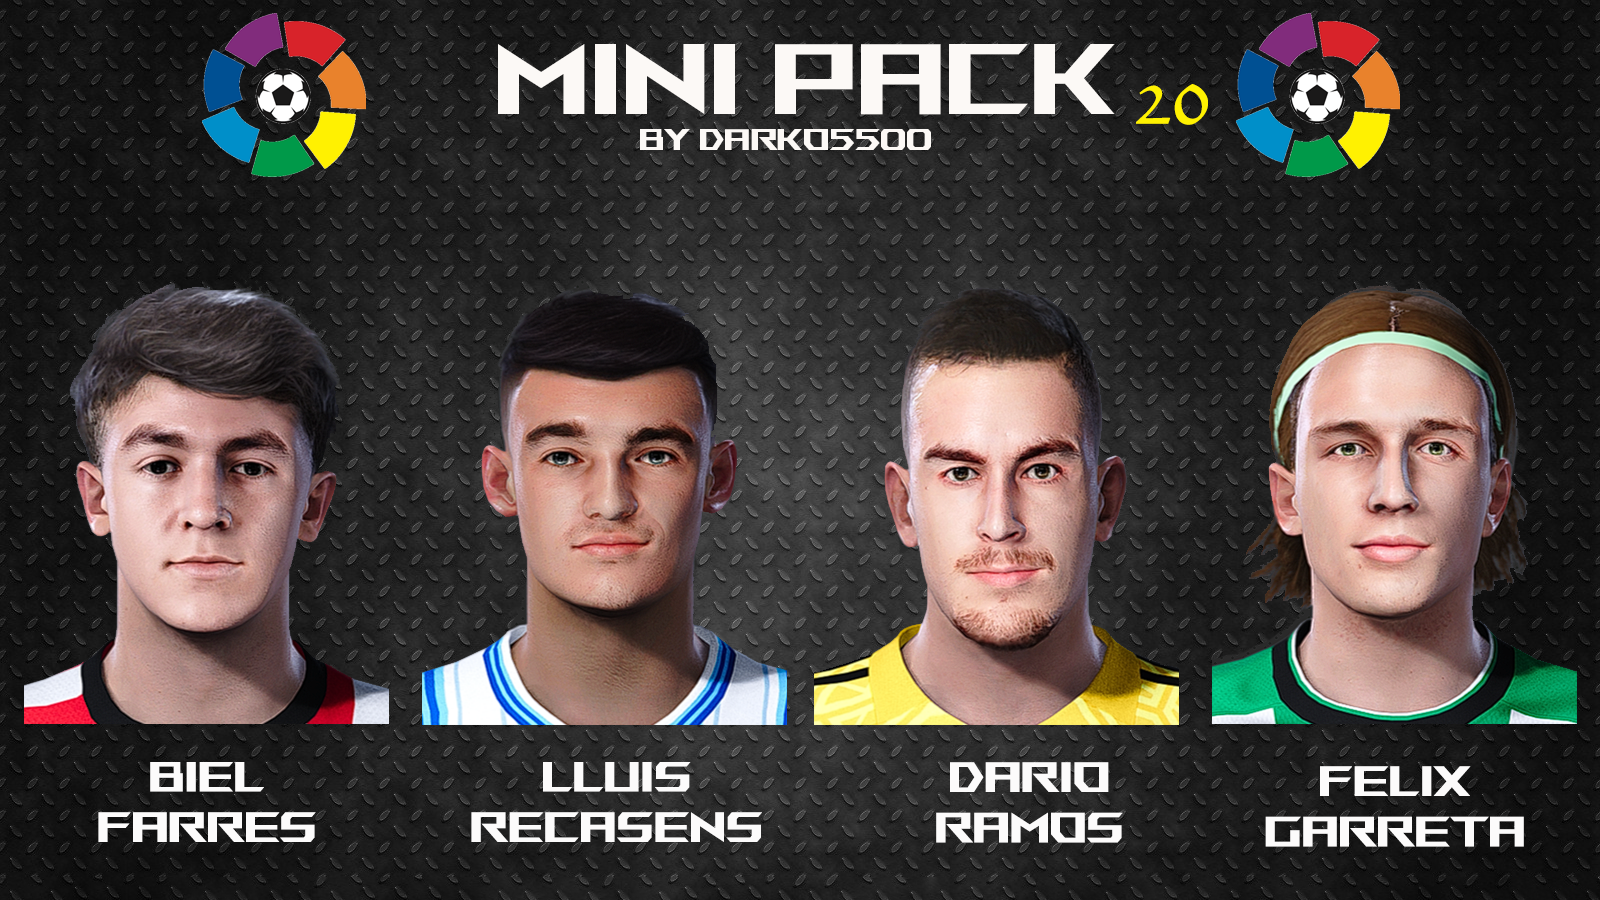 PES 2021 Faces: LaLiga Minipack 20 by Darko5500